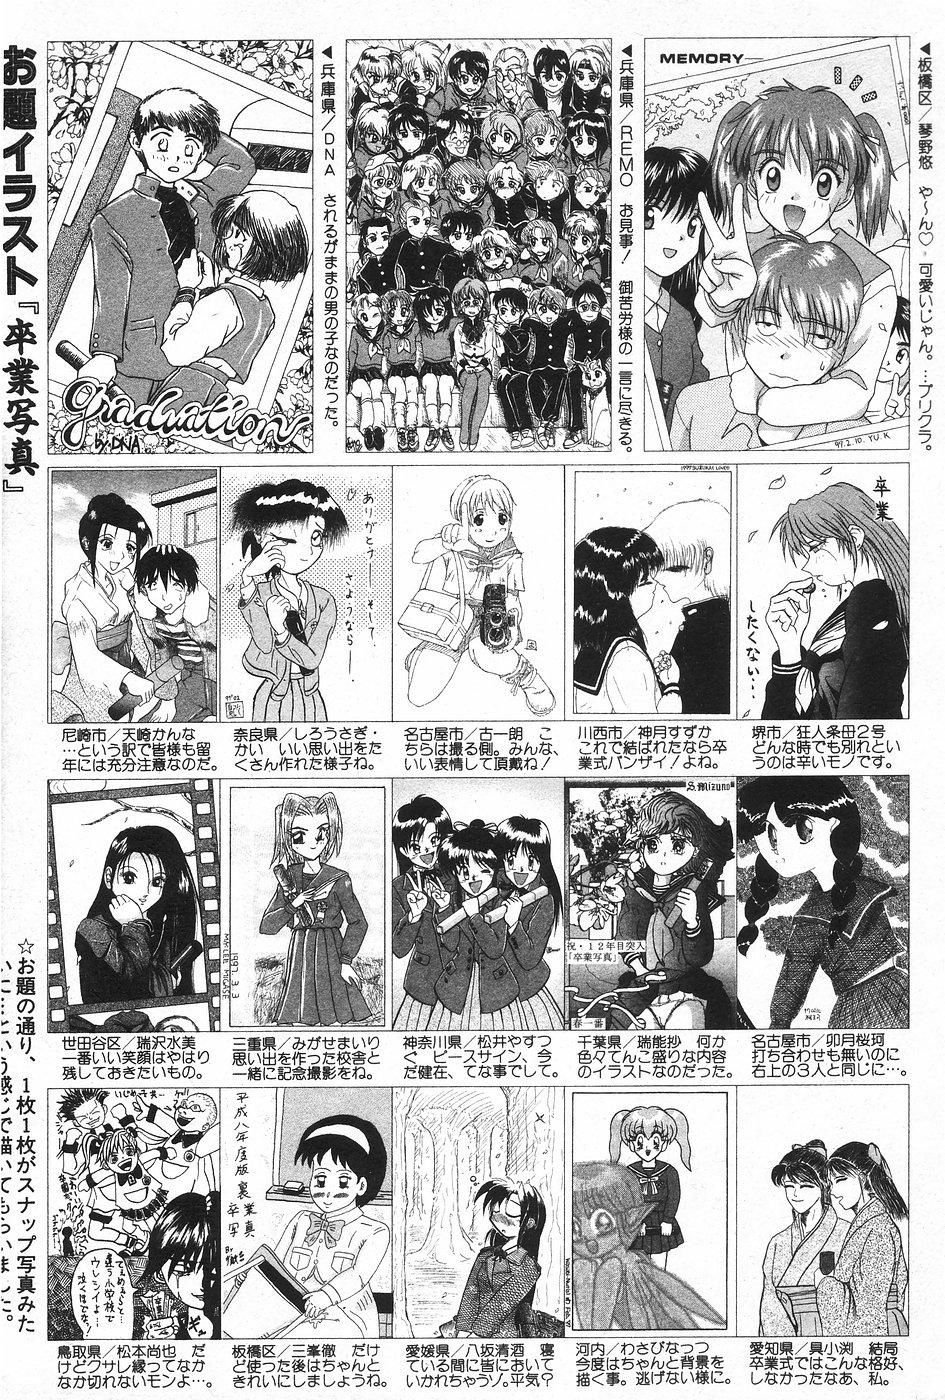 Manga Hotmilk 1997-04 159